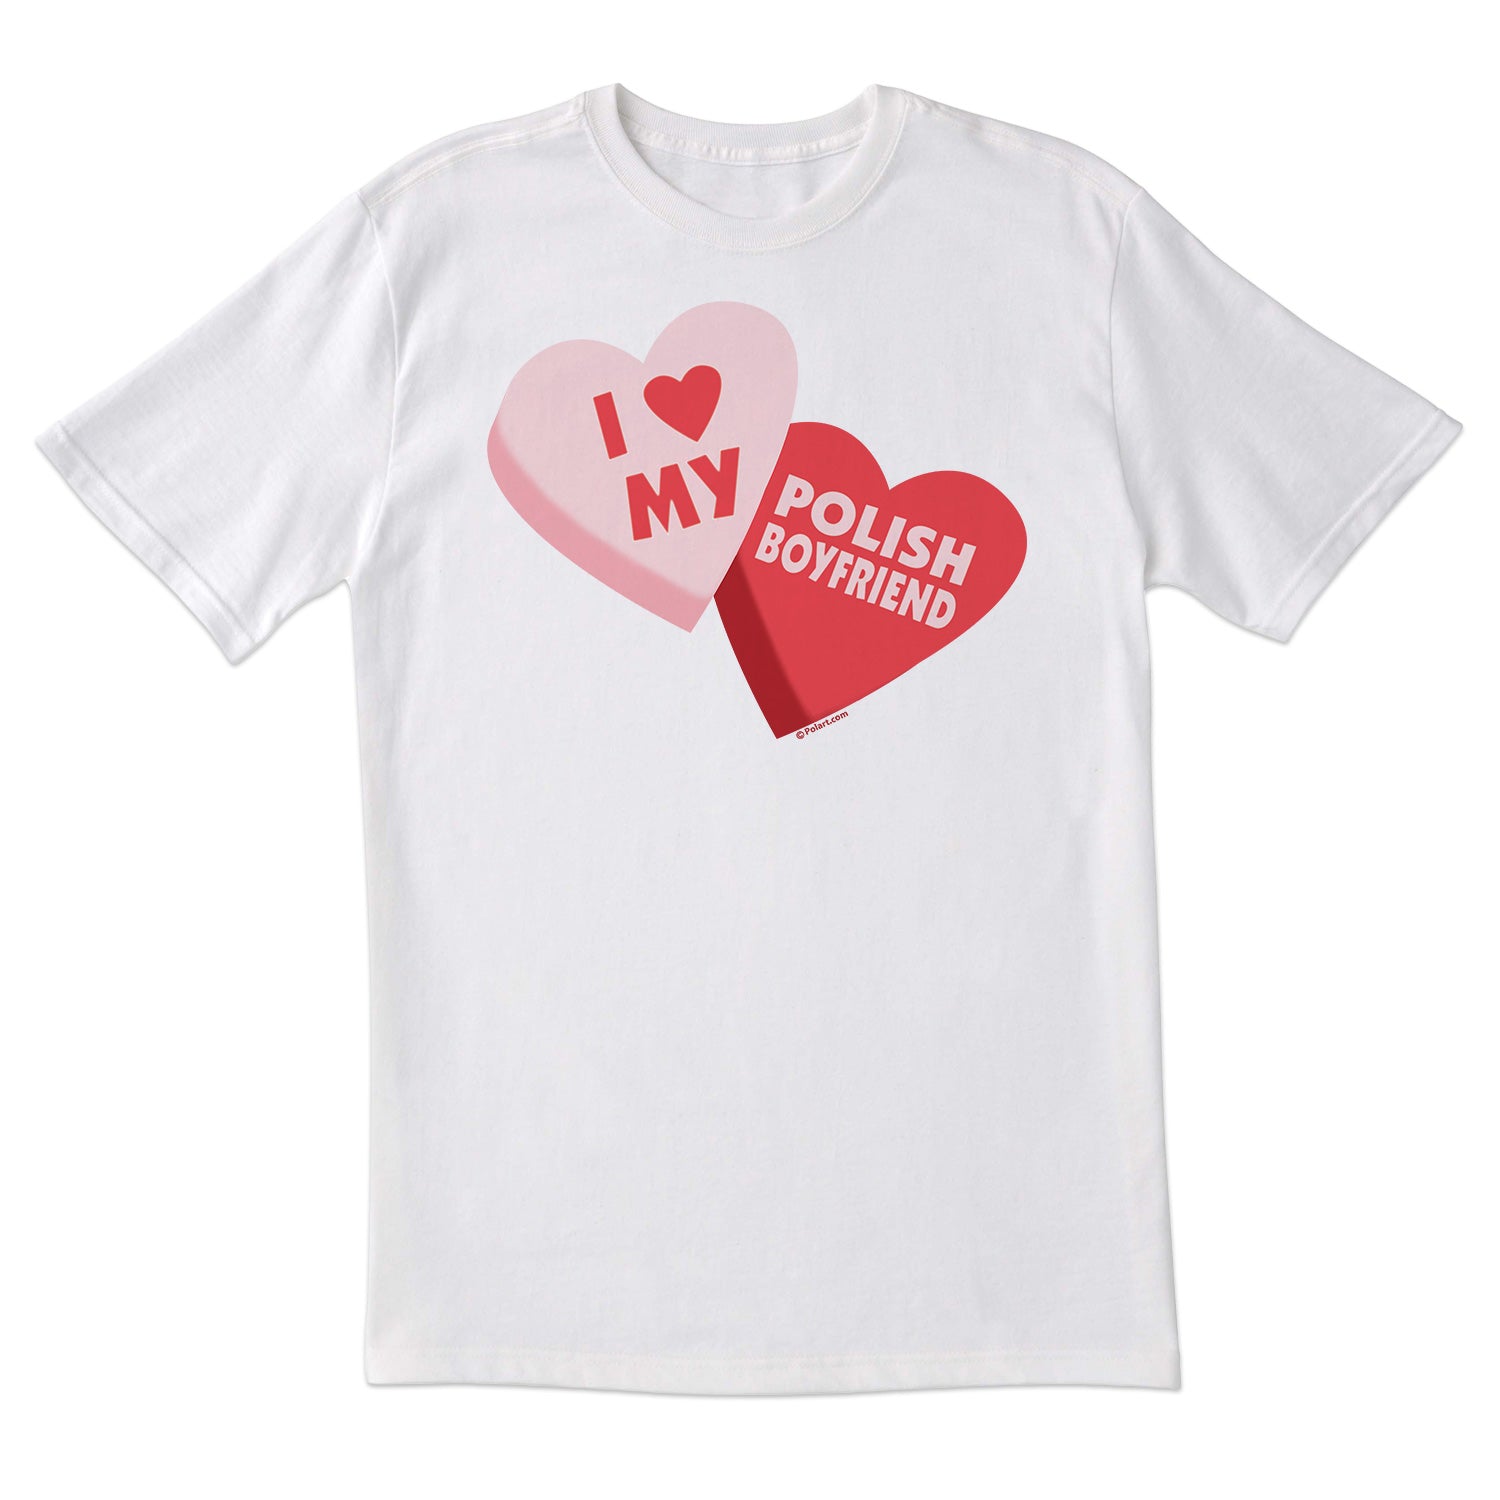 Sweethearts Polish Boyfriend Short Sleeve Tshirt